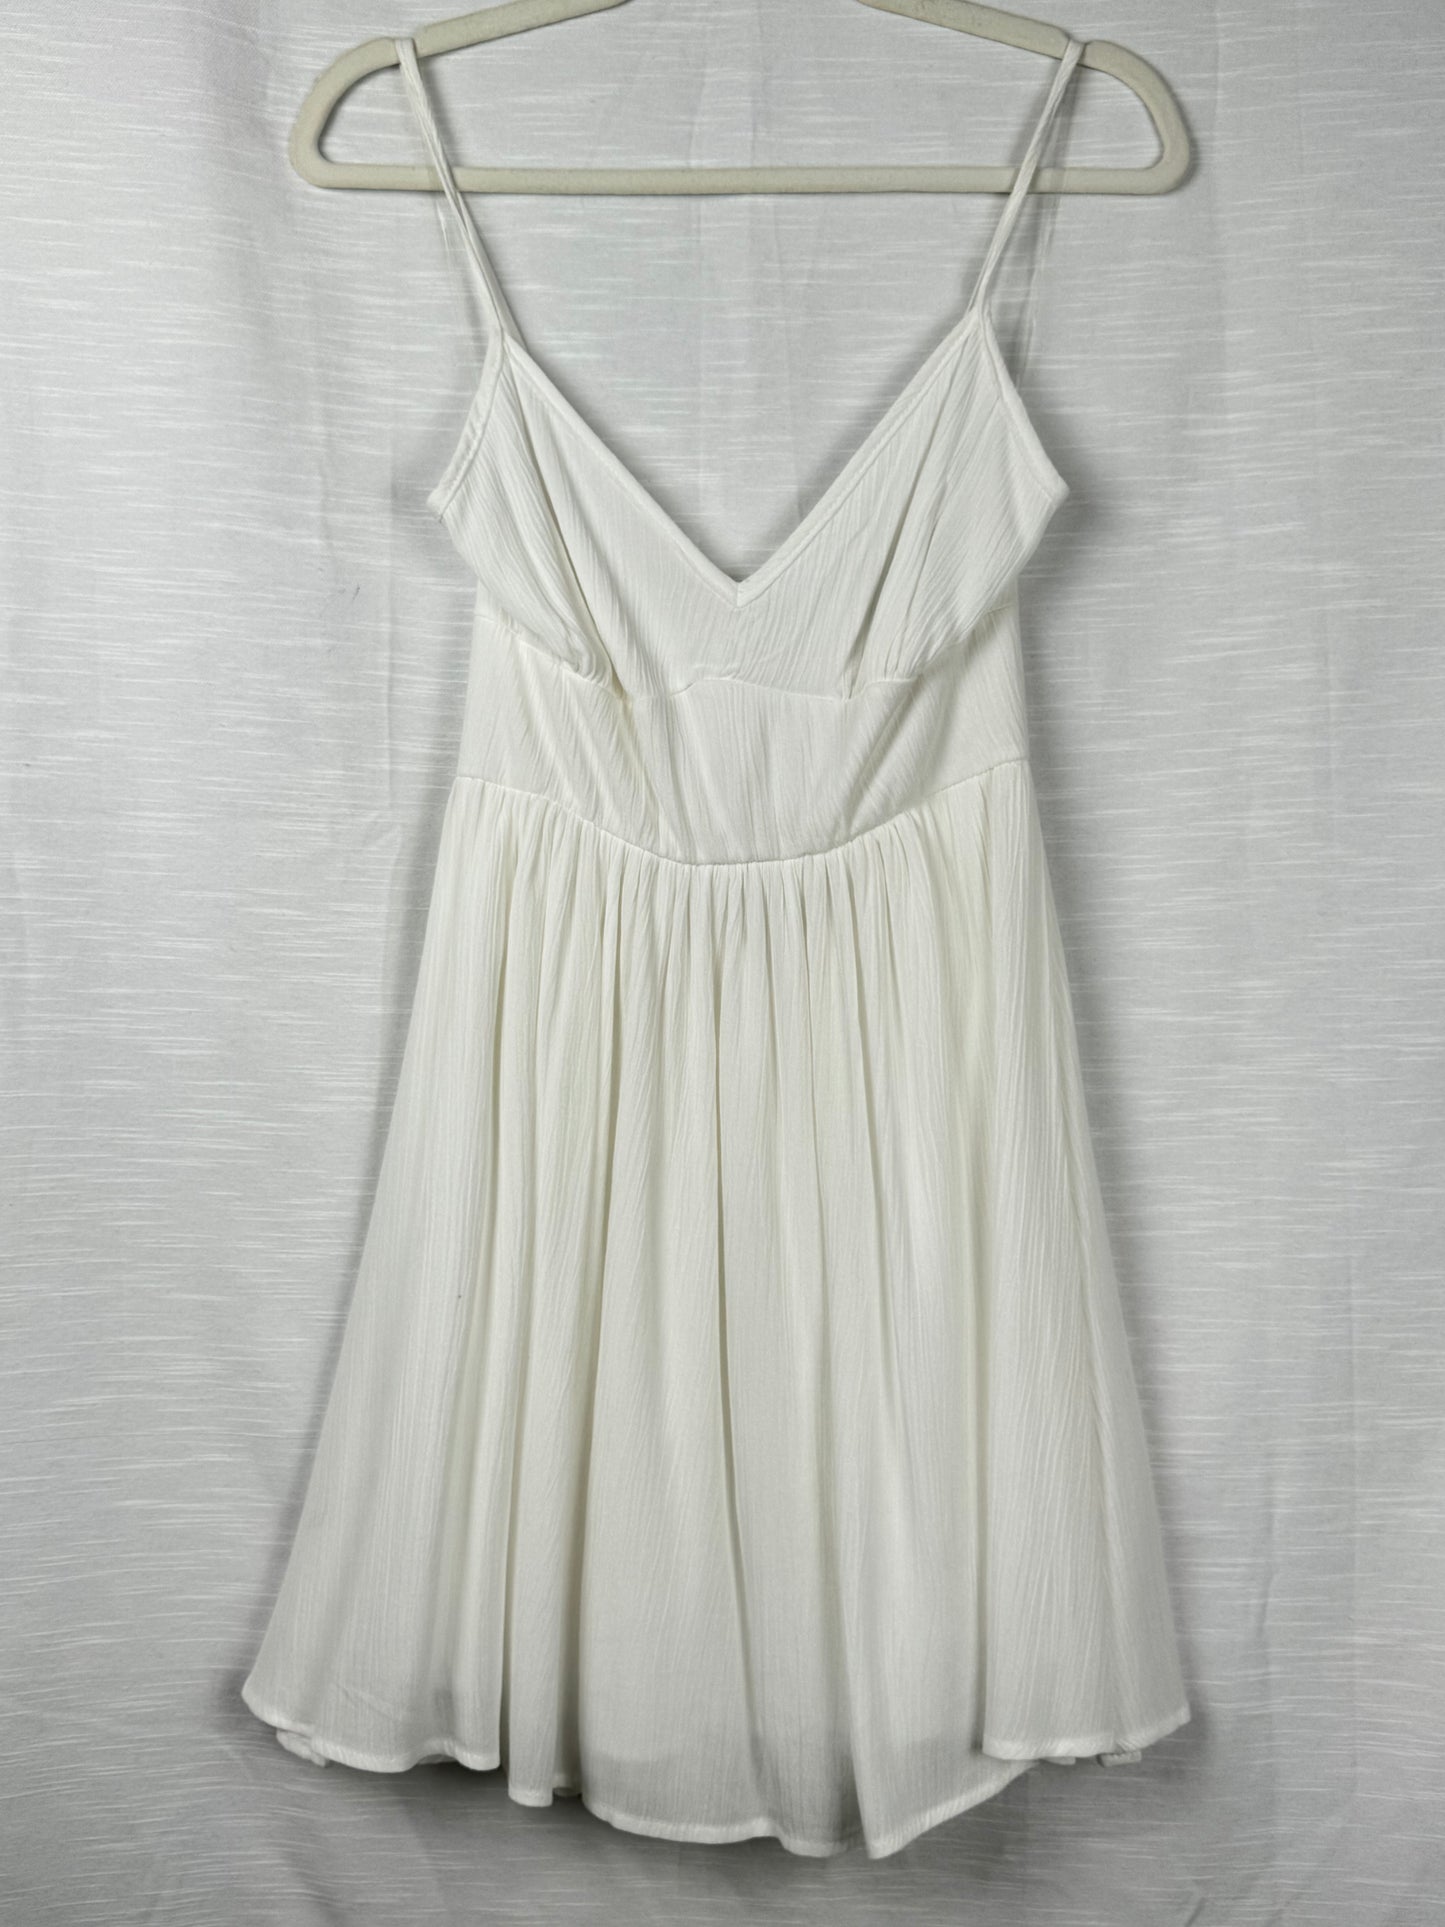 White Homecoming Dress